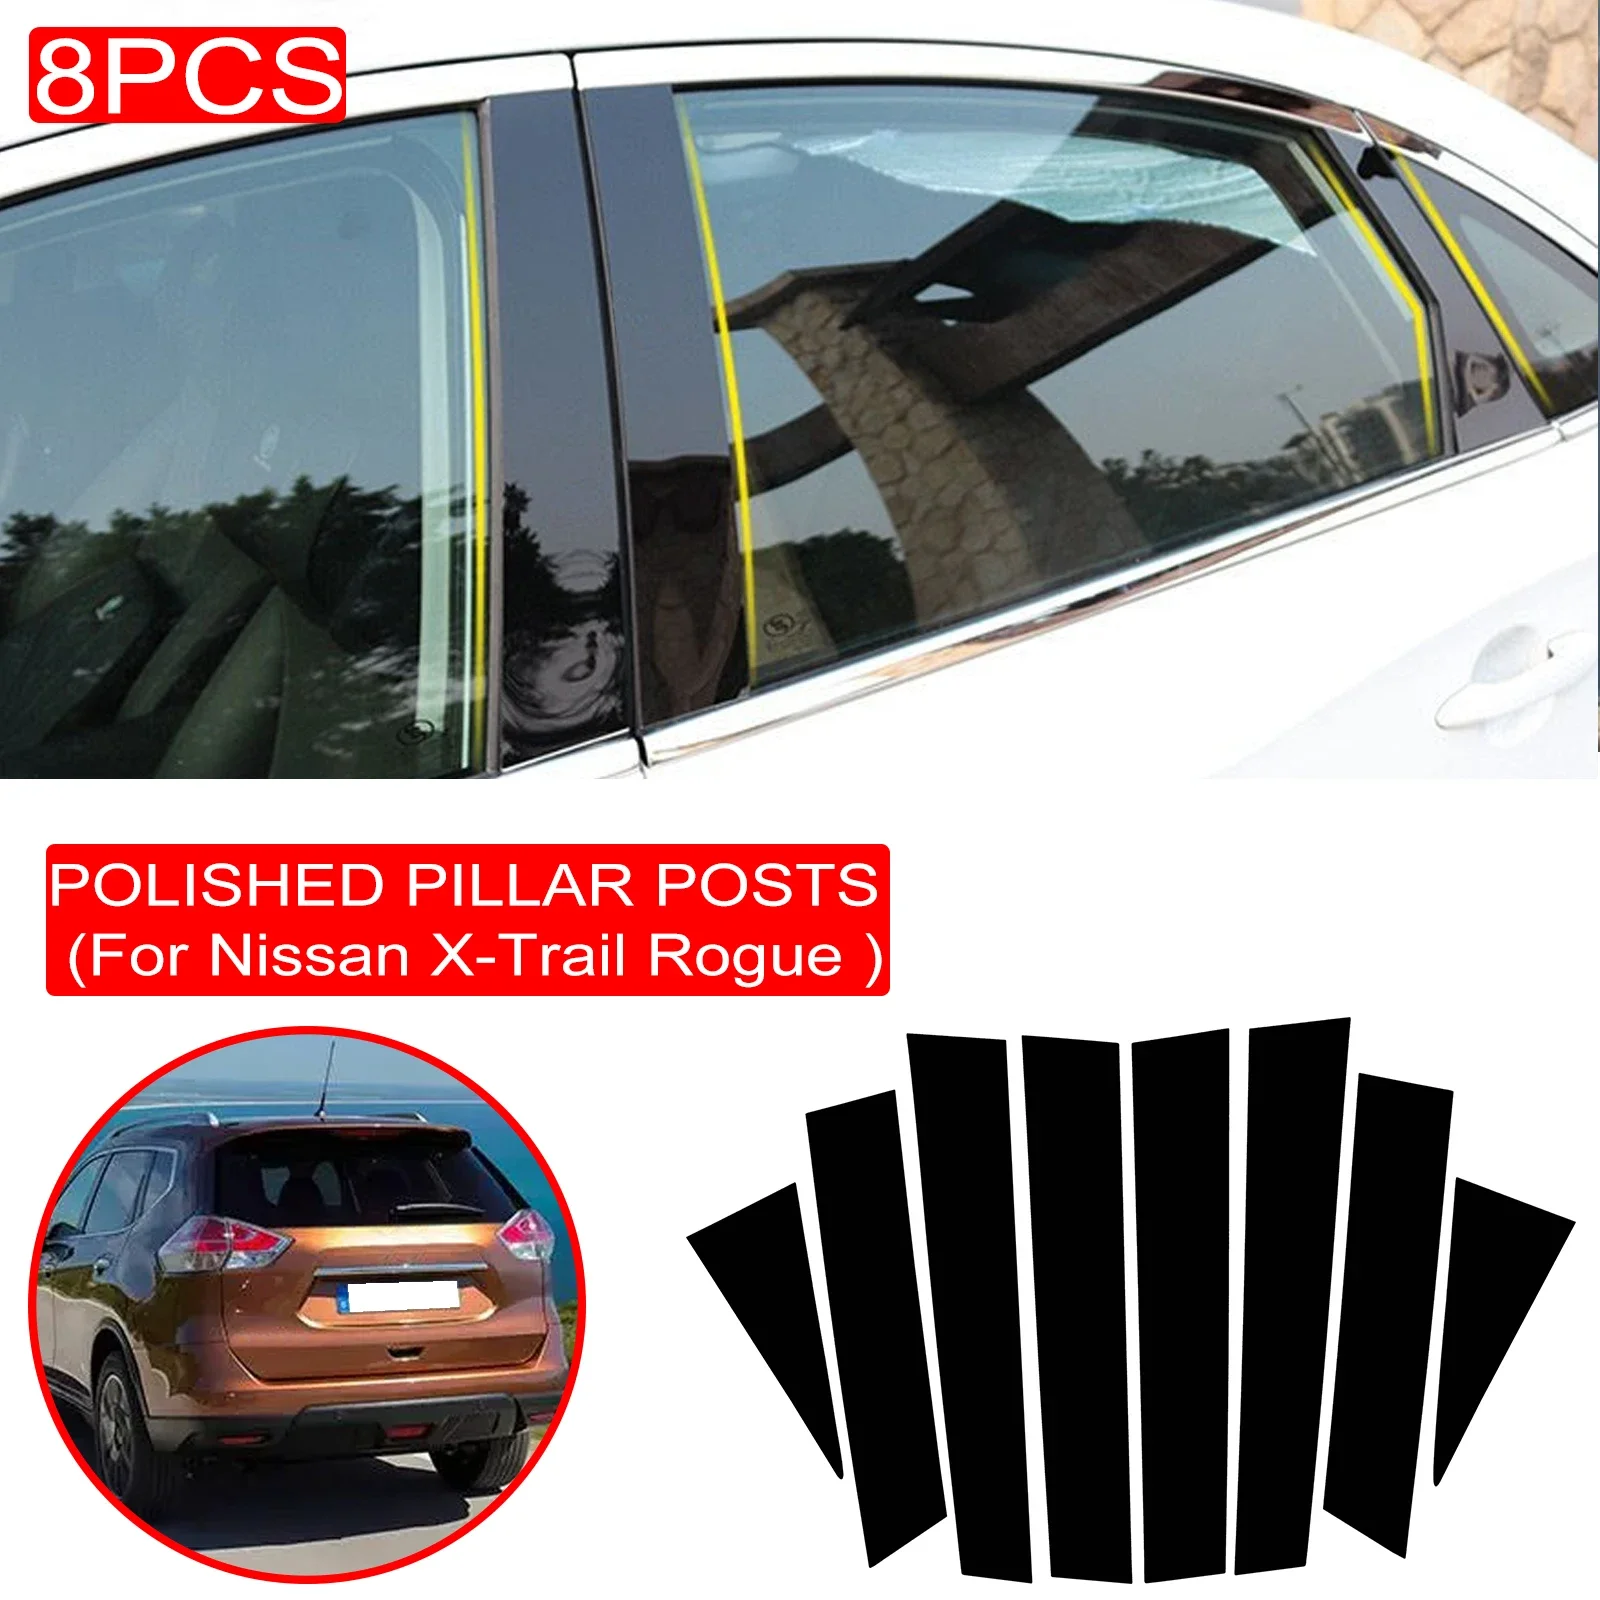 

8PCS Polished Pillar Posts Car Window Trim Cover BC Column Sticker Accessories For Nissan X-Trail Rogue 2014-2018